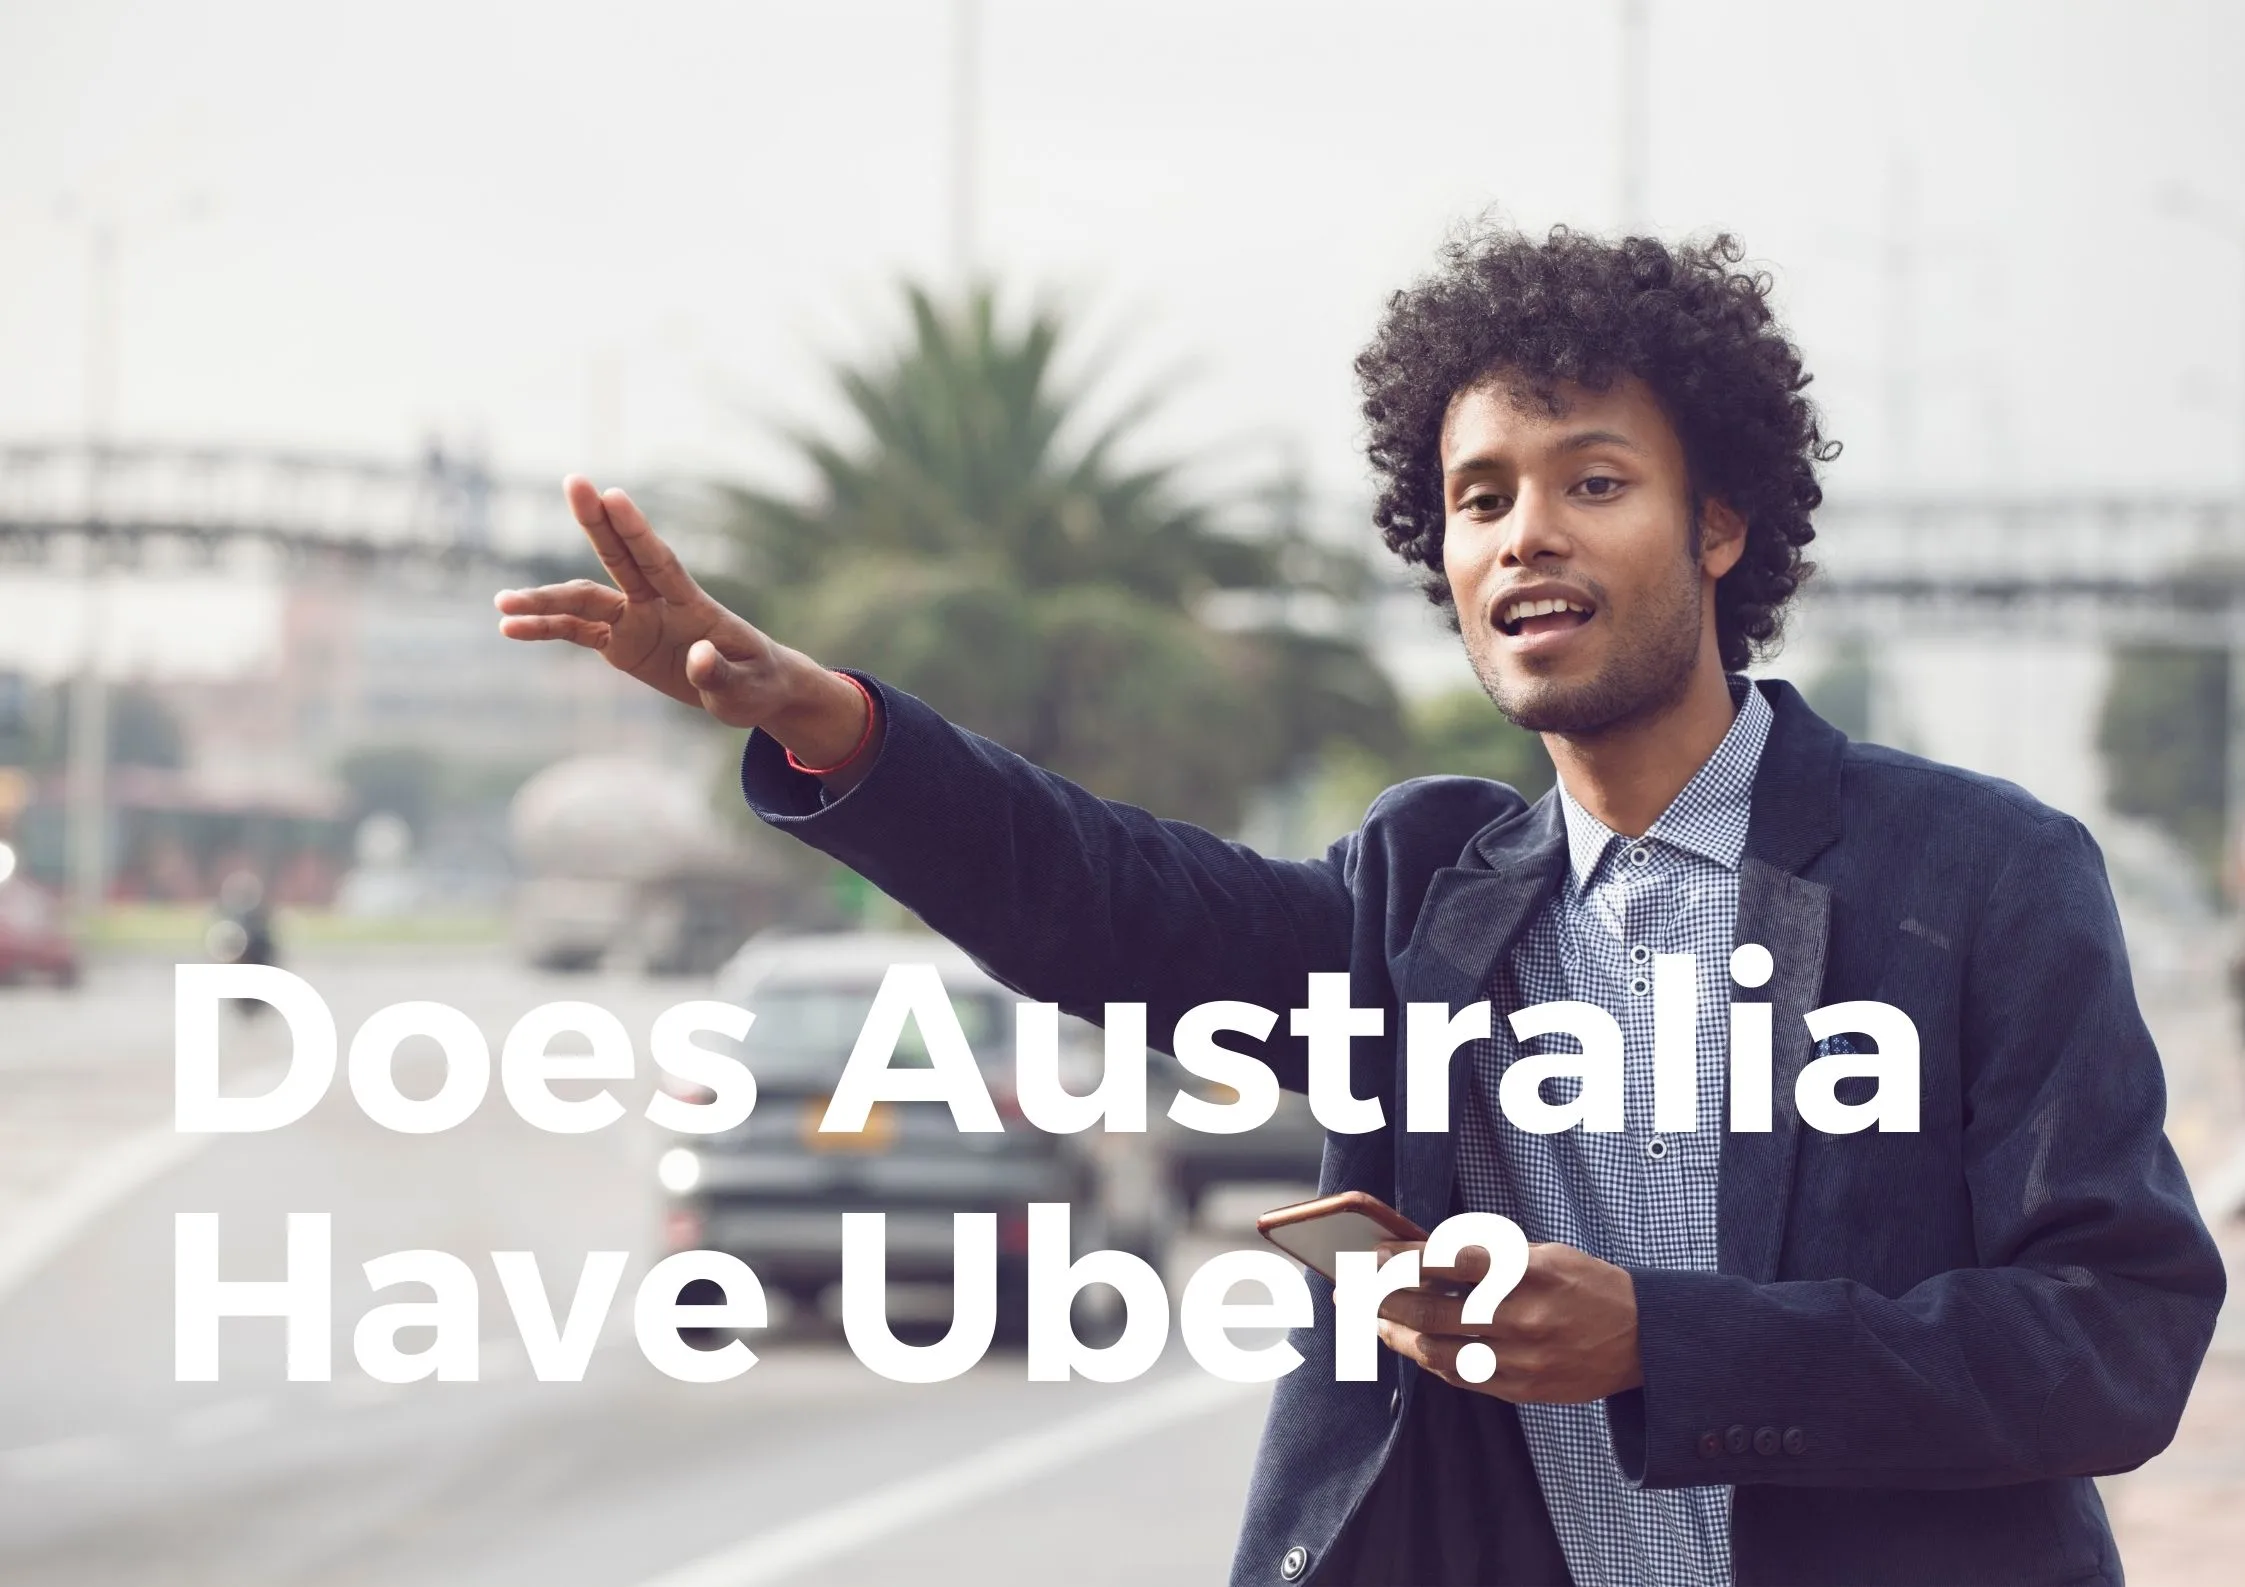 Does Australia have Uber